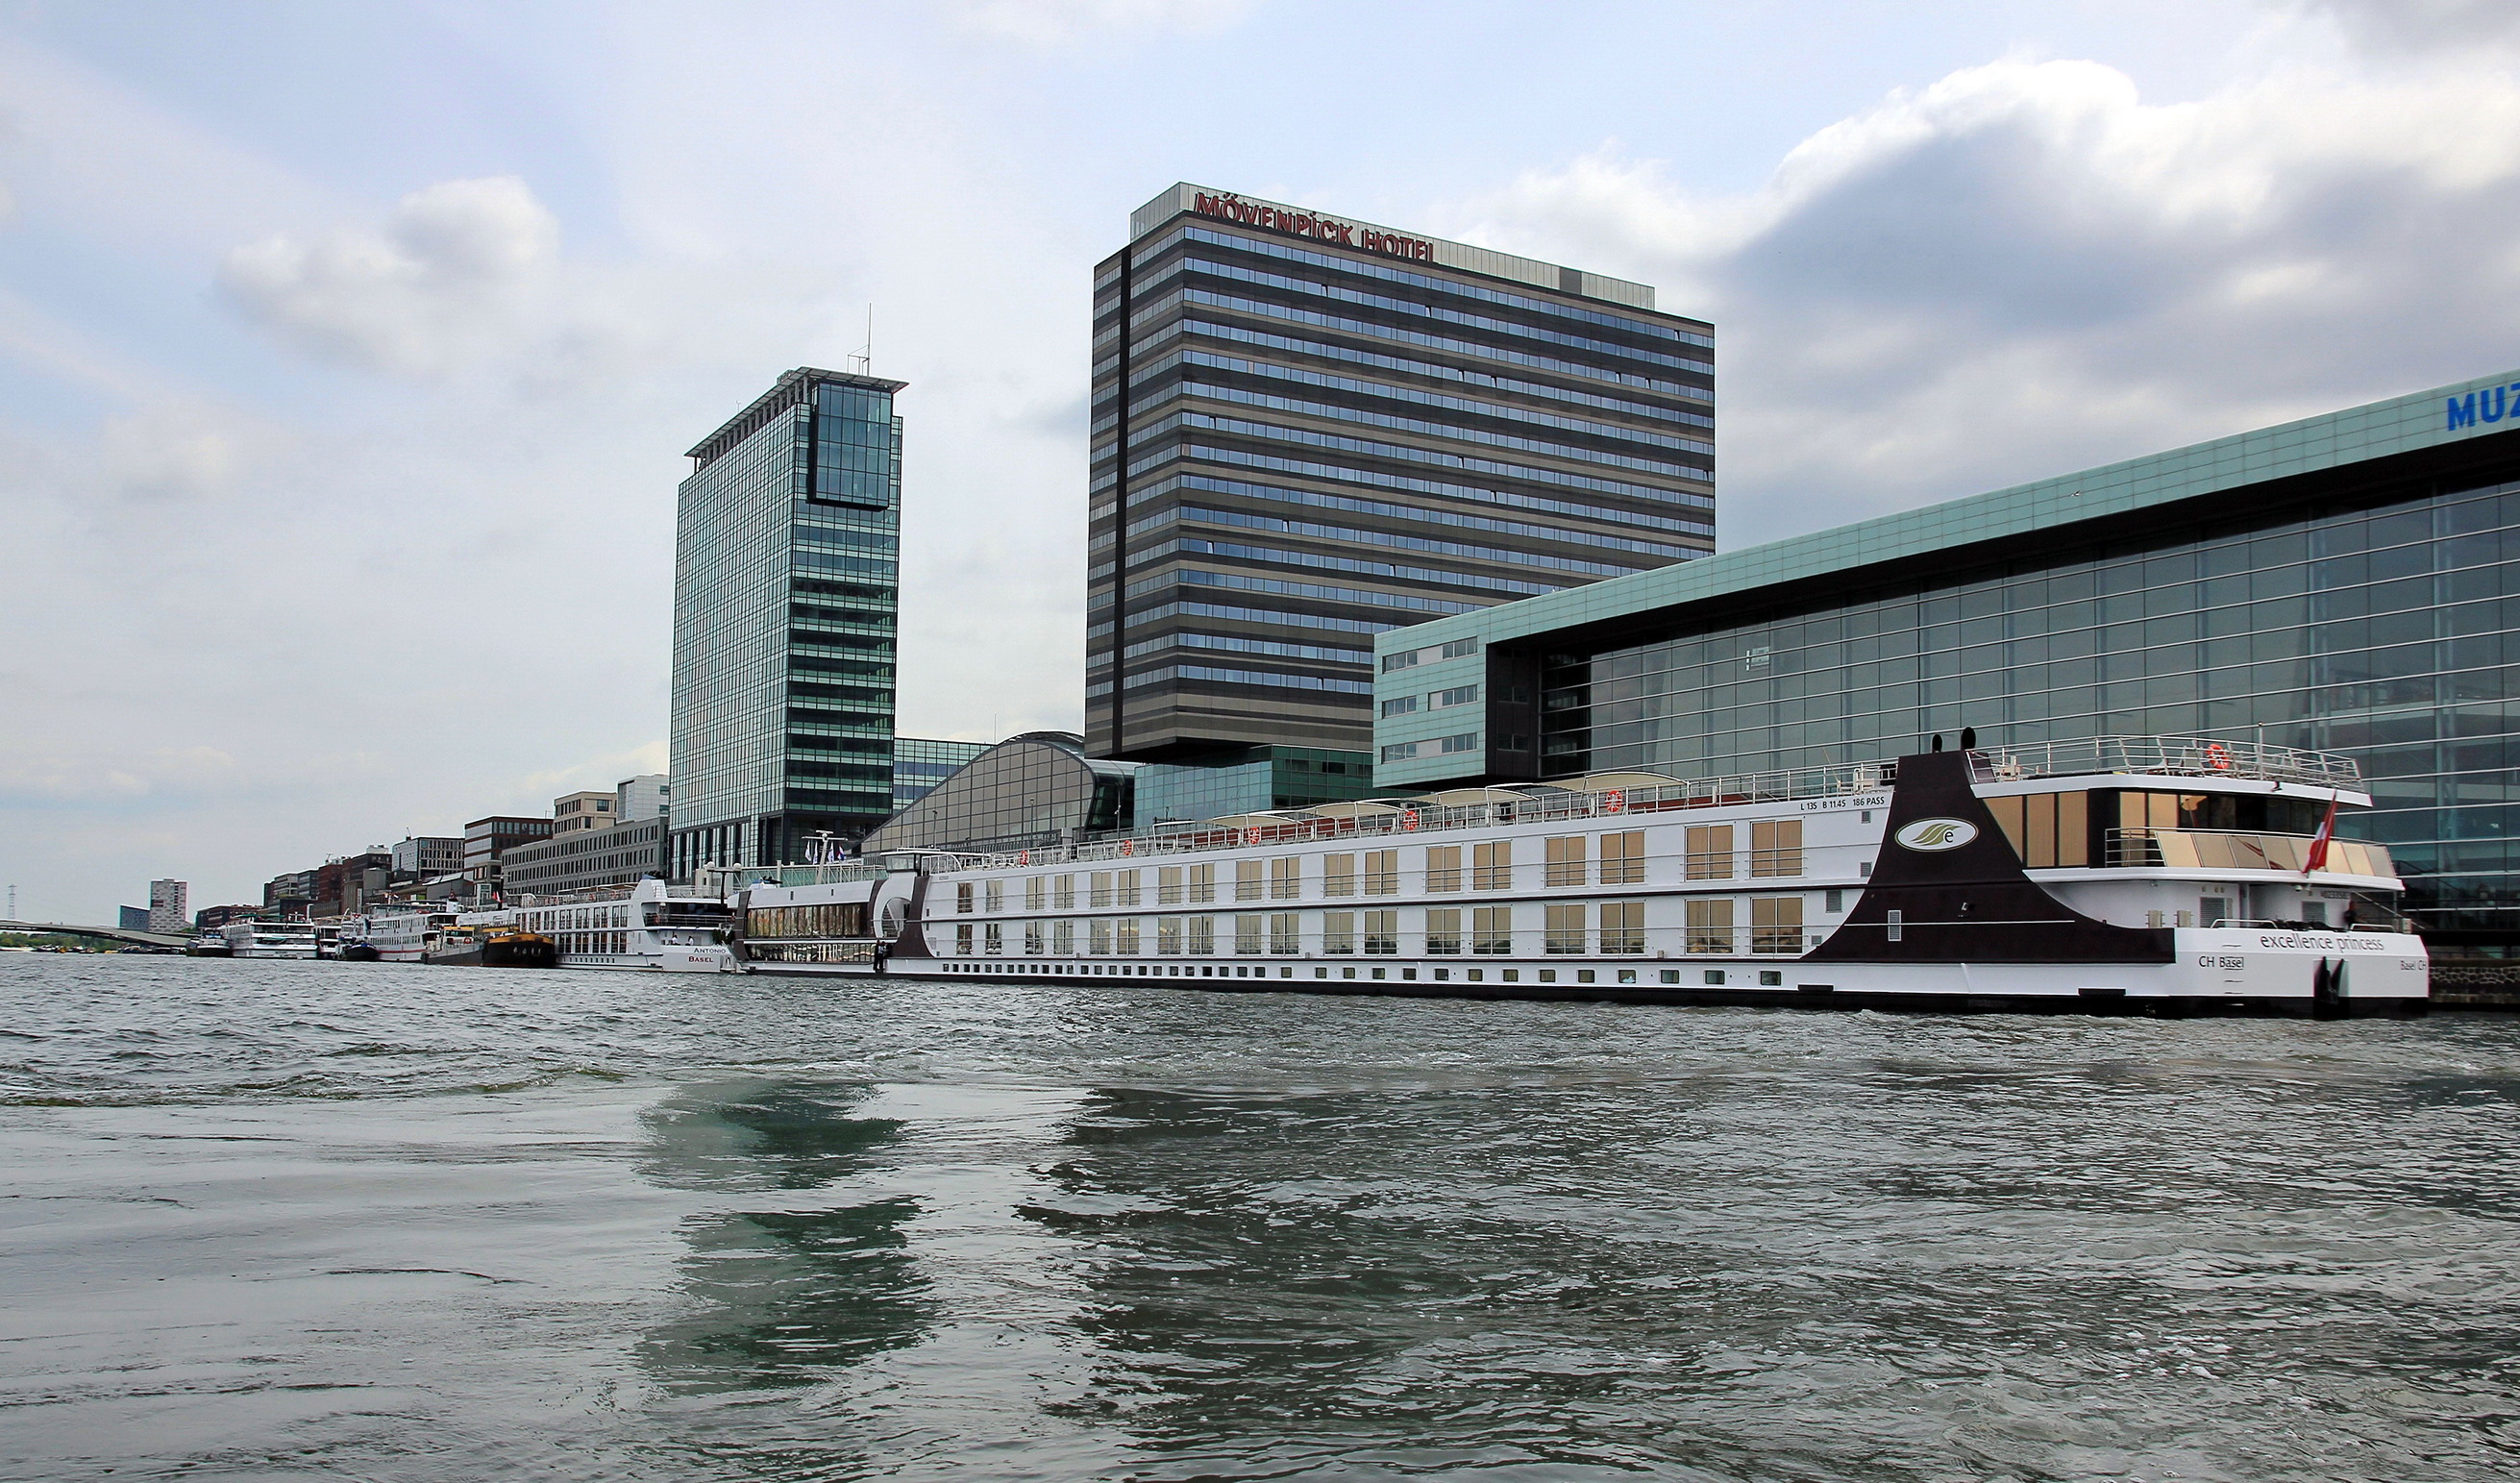 Cruise ship terminal Amsterdam - Amsterdam